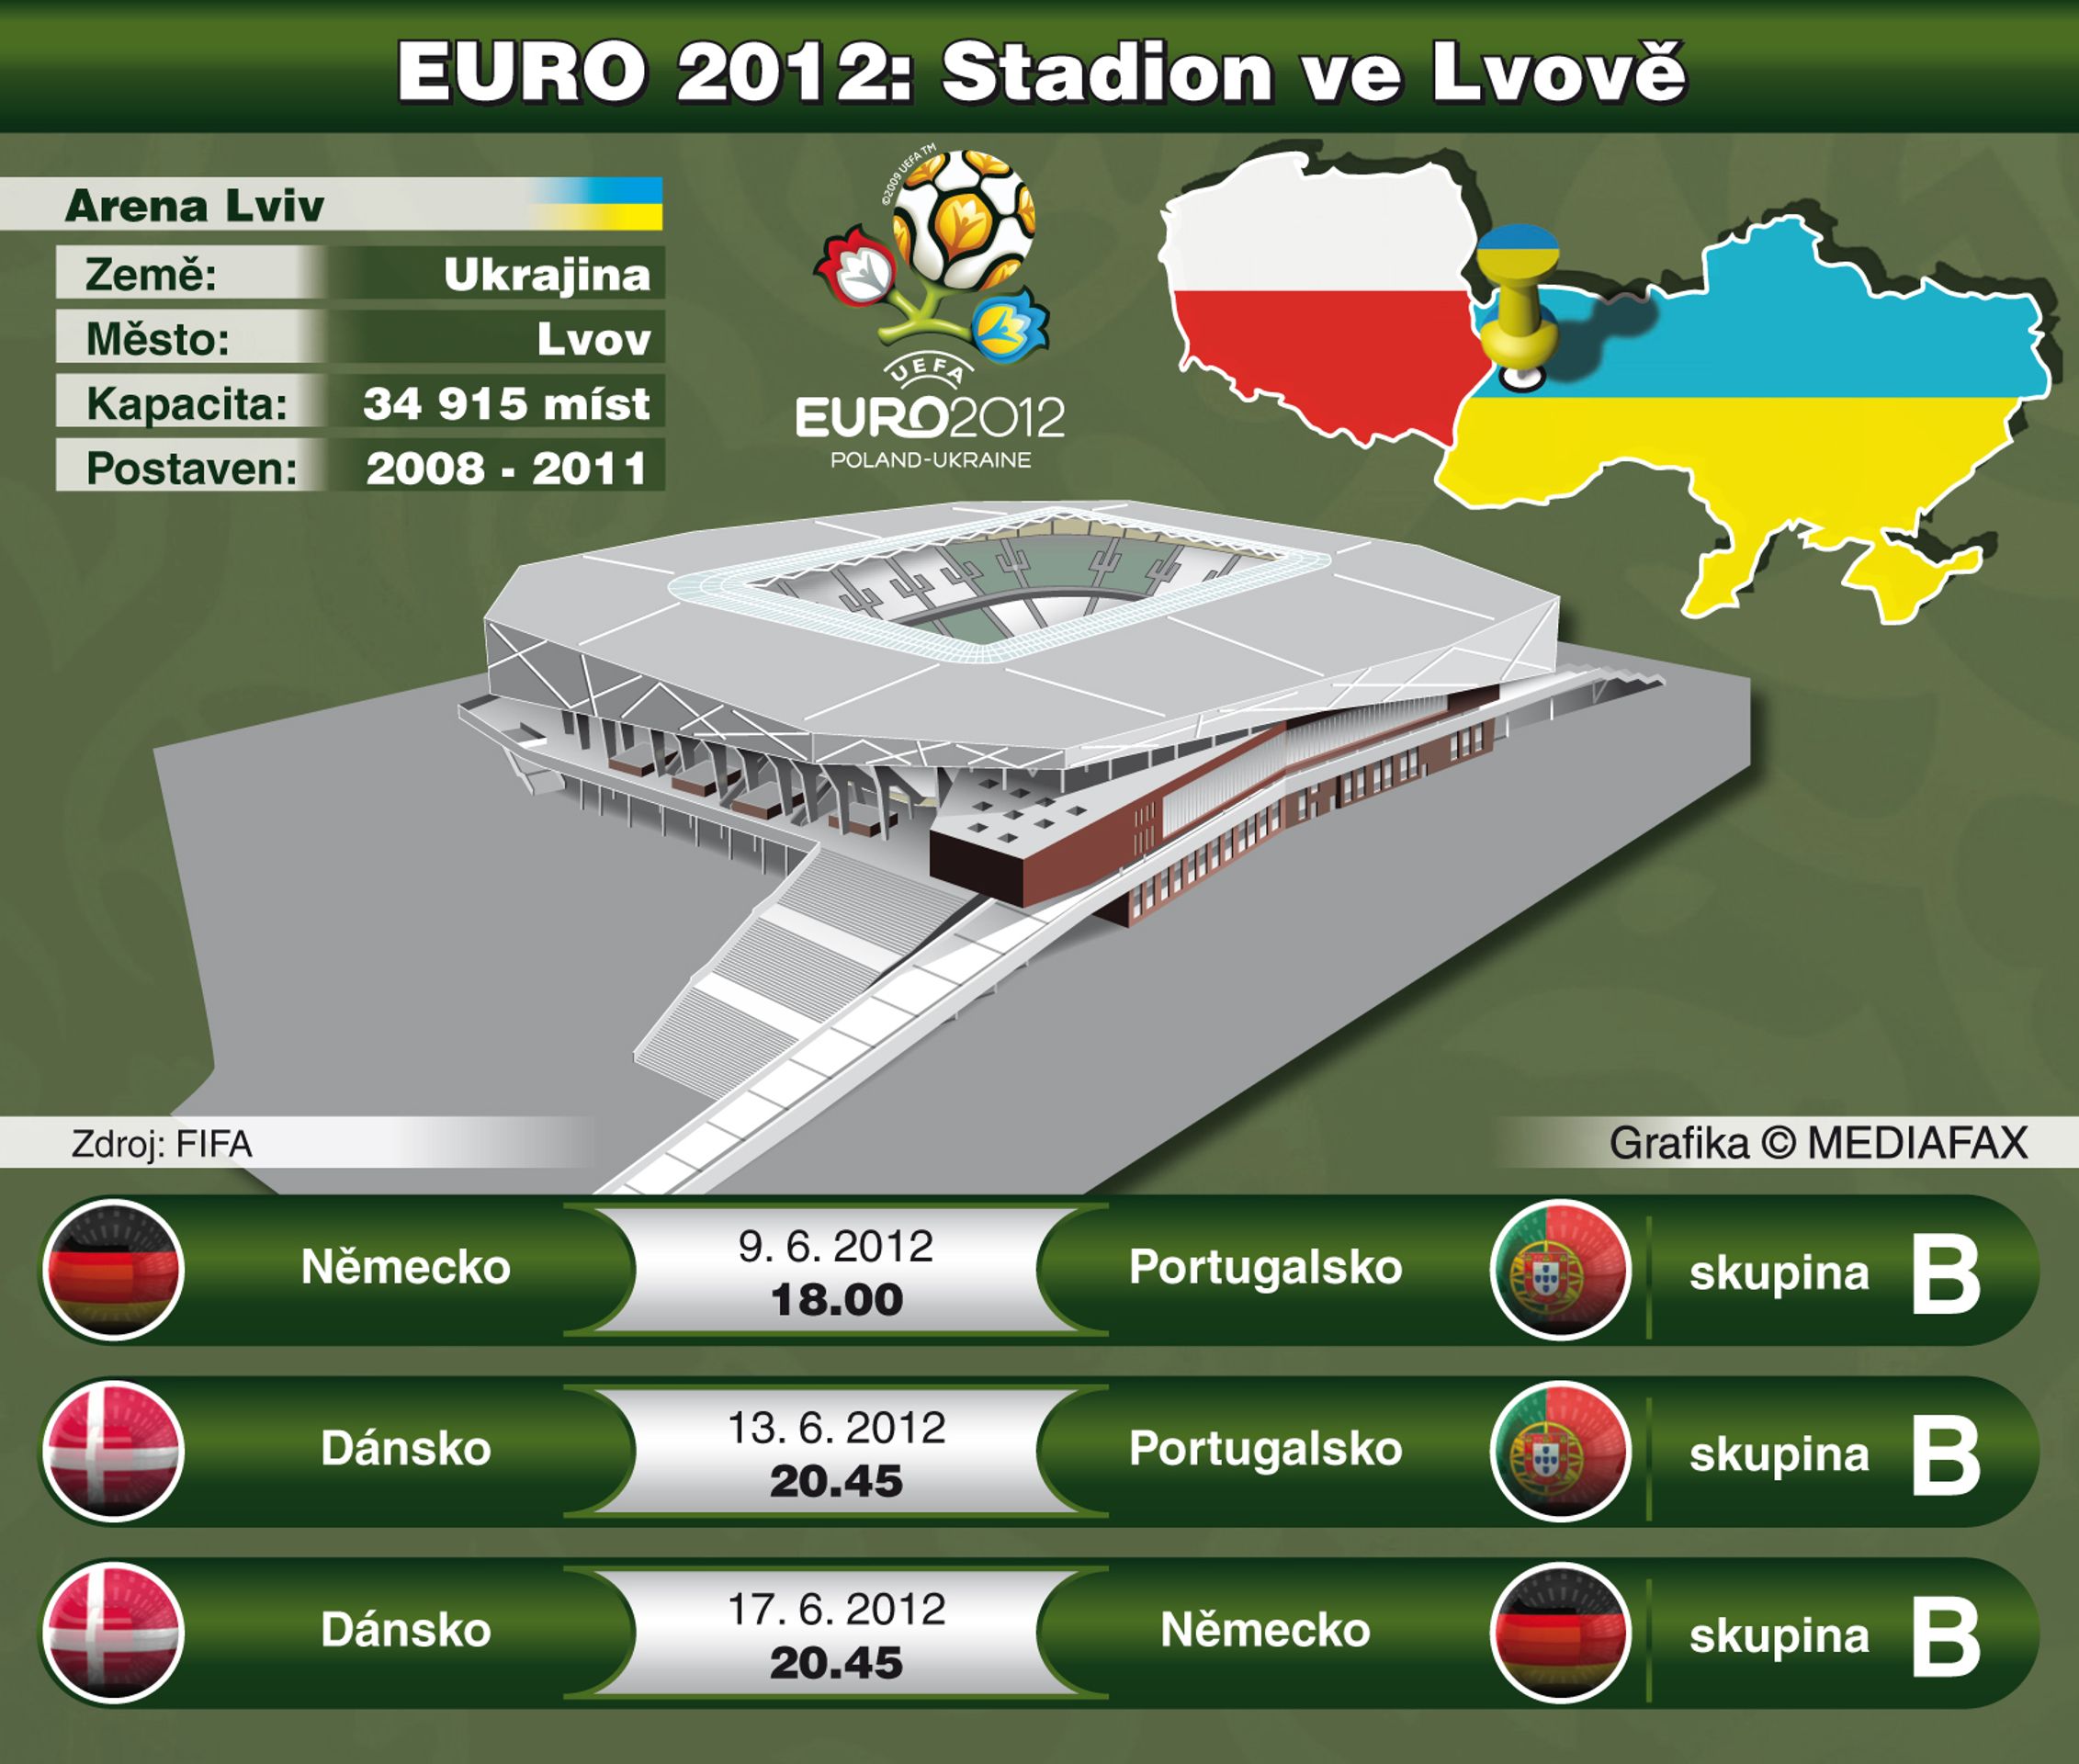 Stadiony pro EURO 2012 - 5 - GALERIE: Stadiony pro fotbalové EURO 2012 (4/8)